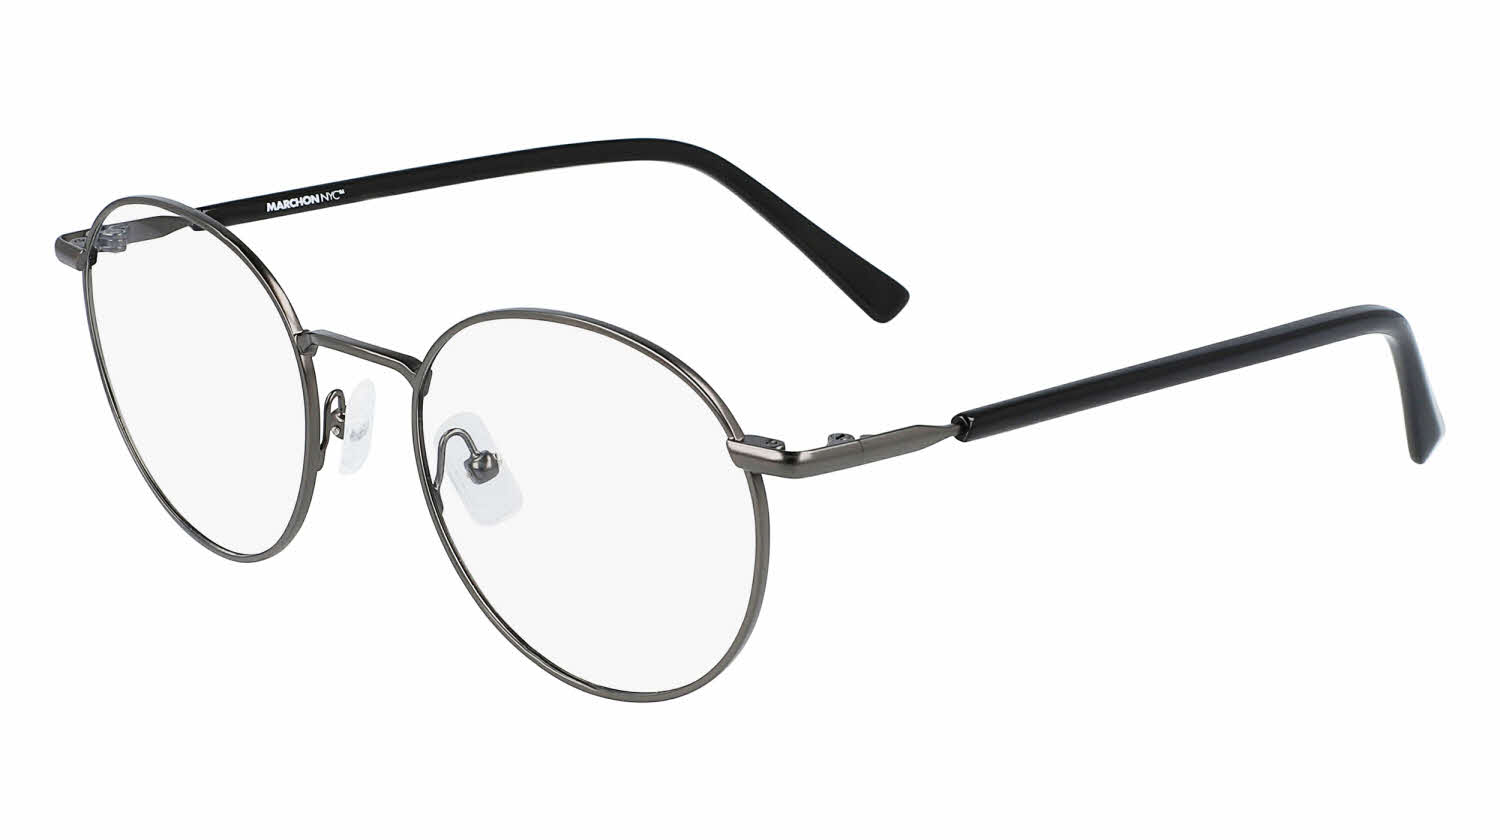 Marchon M-8003 Eyeglasses